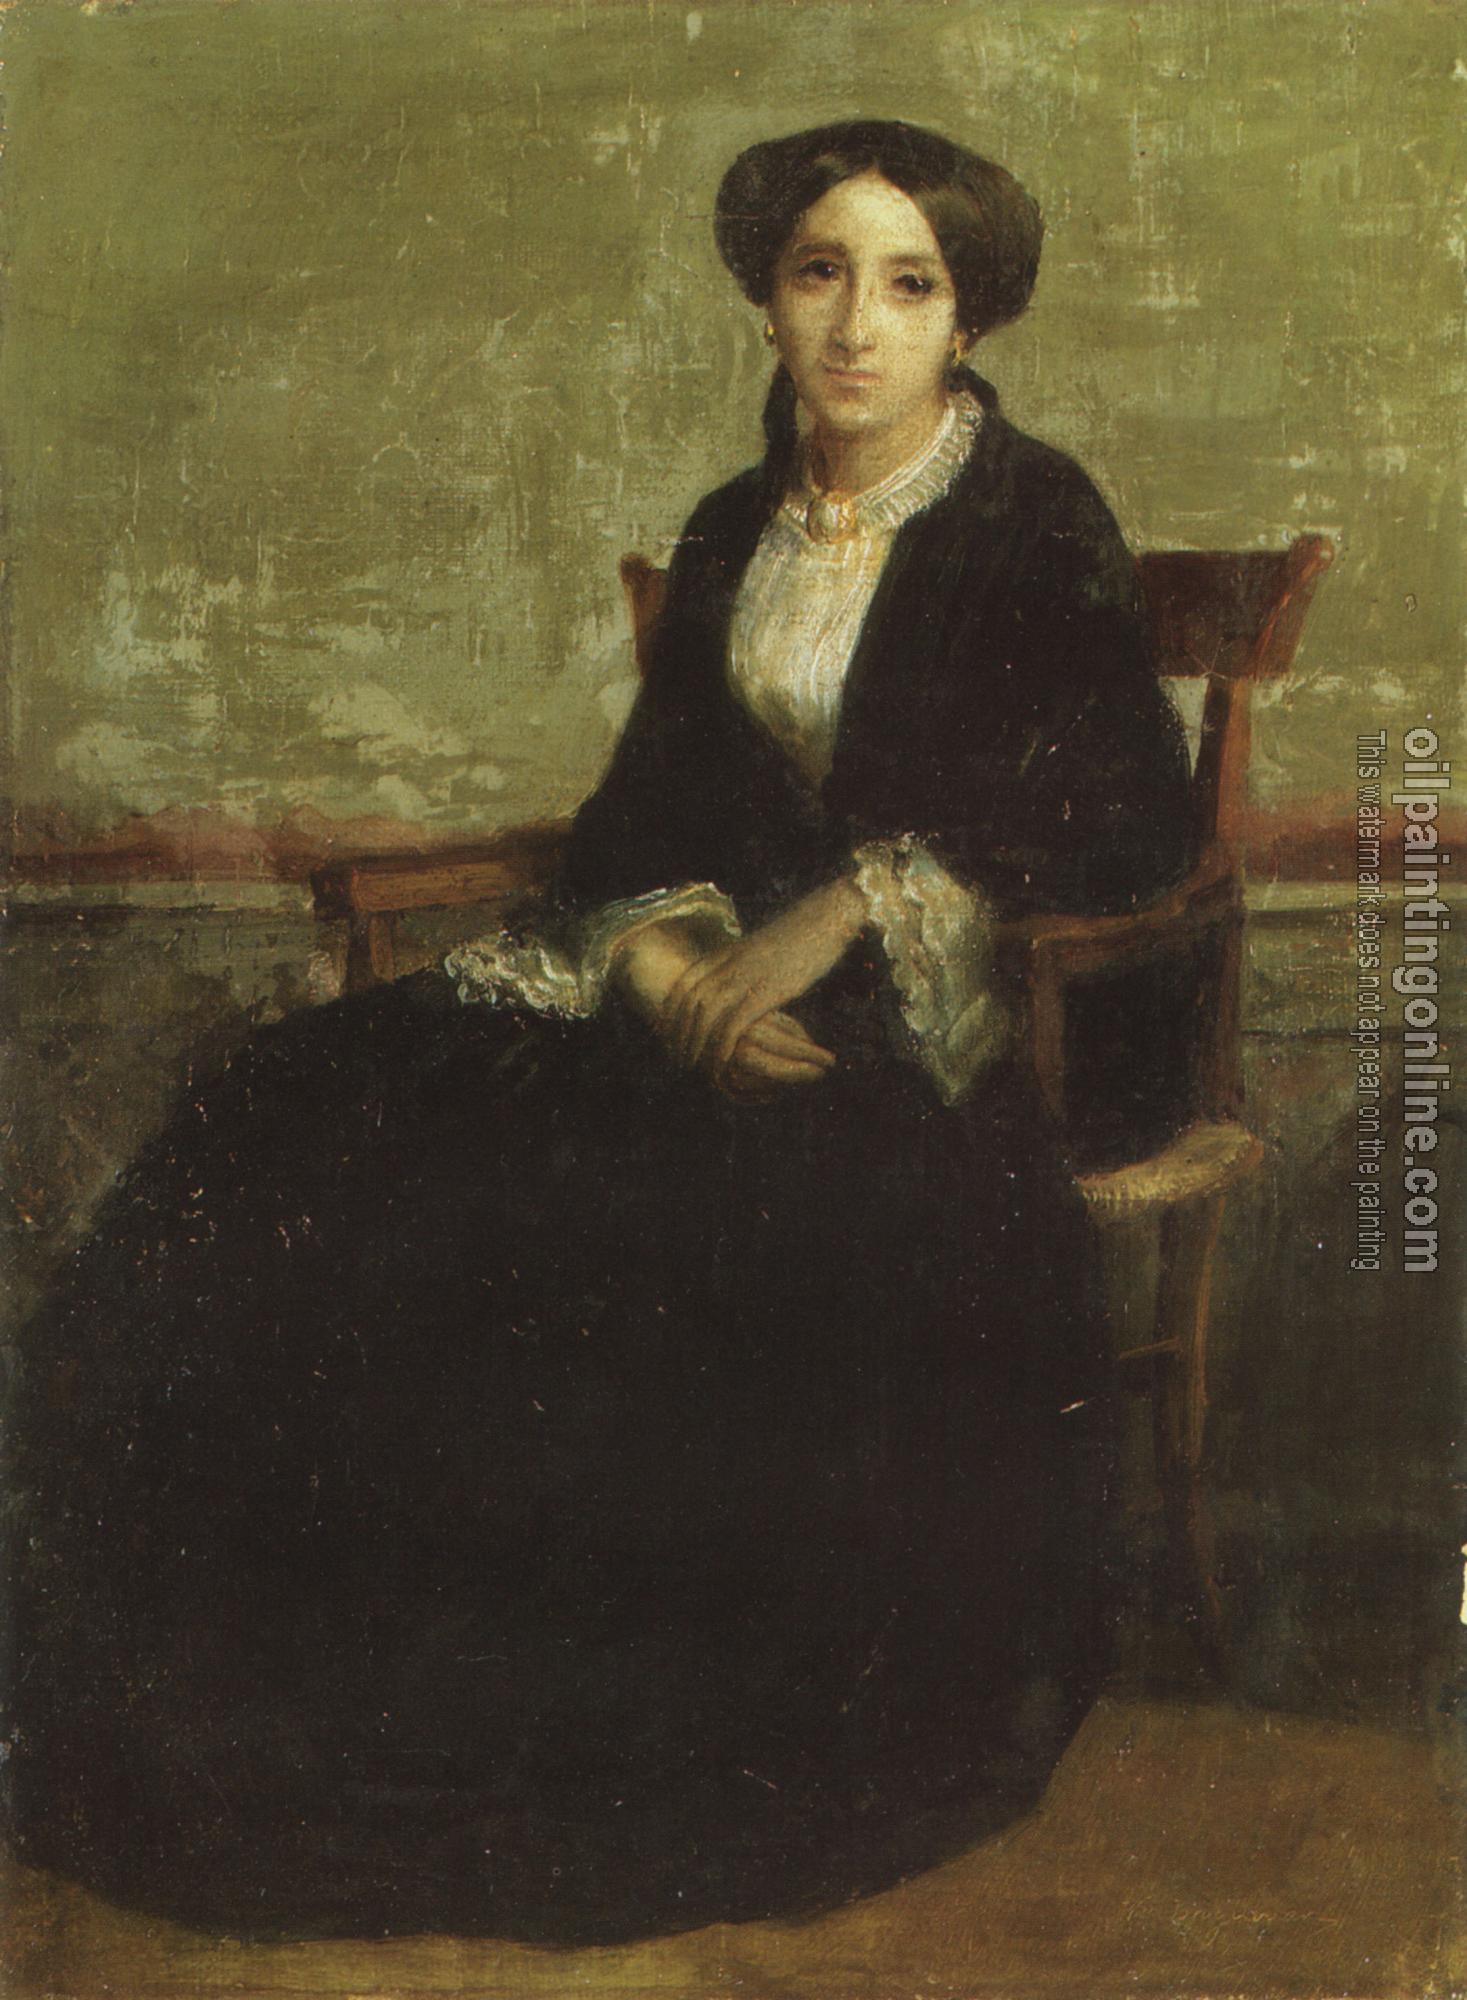 Bouguereau, William-Adolphe - A Portrait of Genevieve Bouguereau